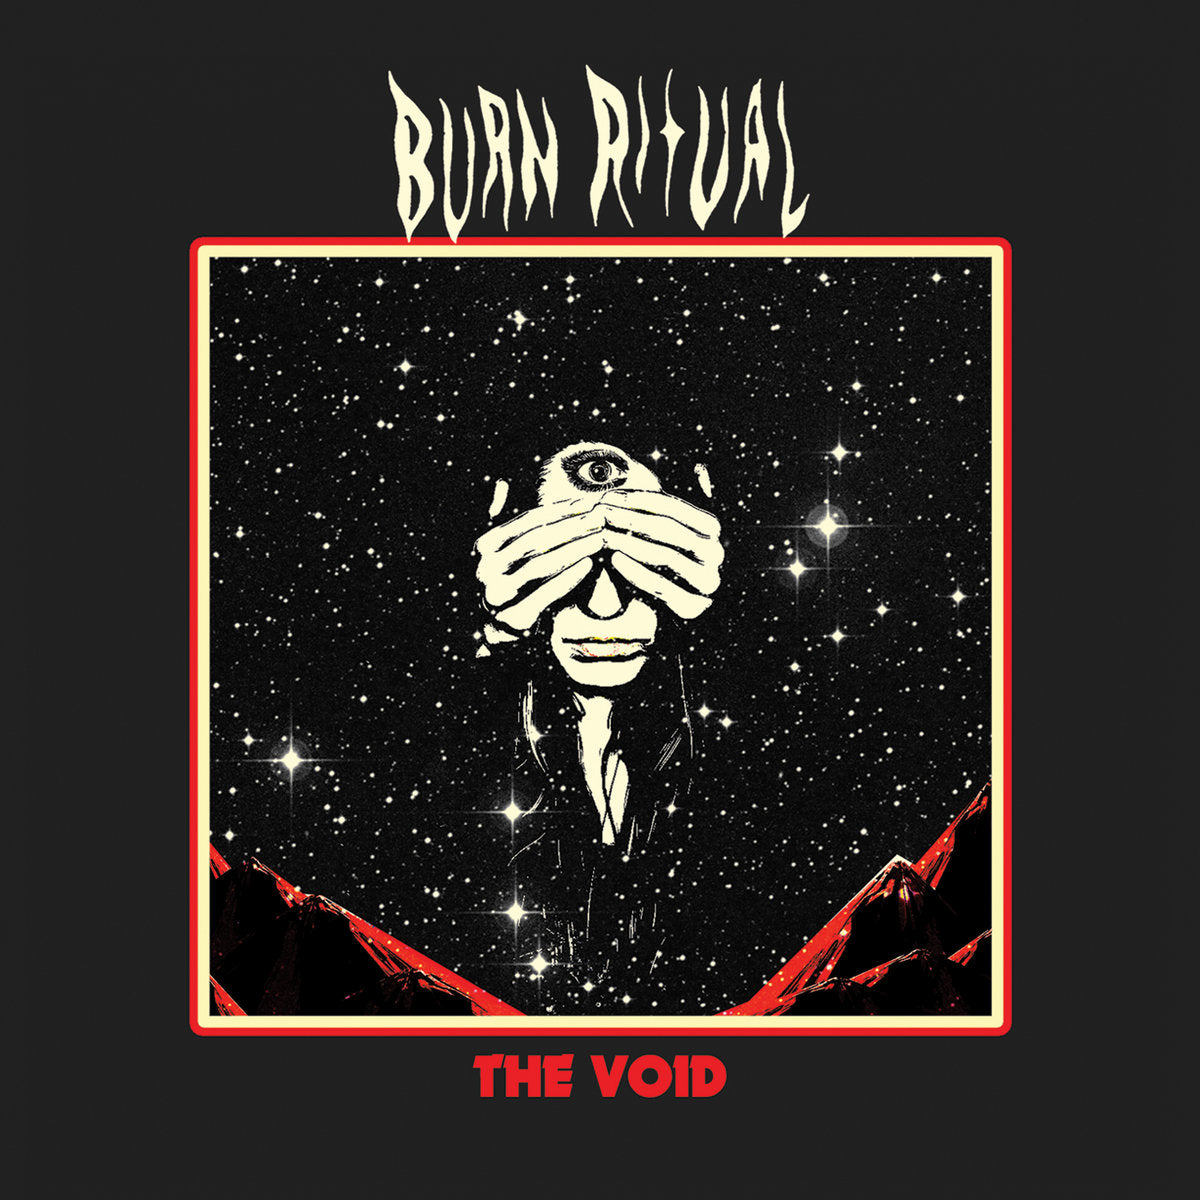 Burn Ritual - "The Void" Cassette